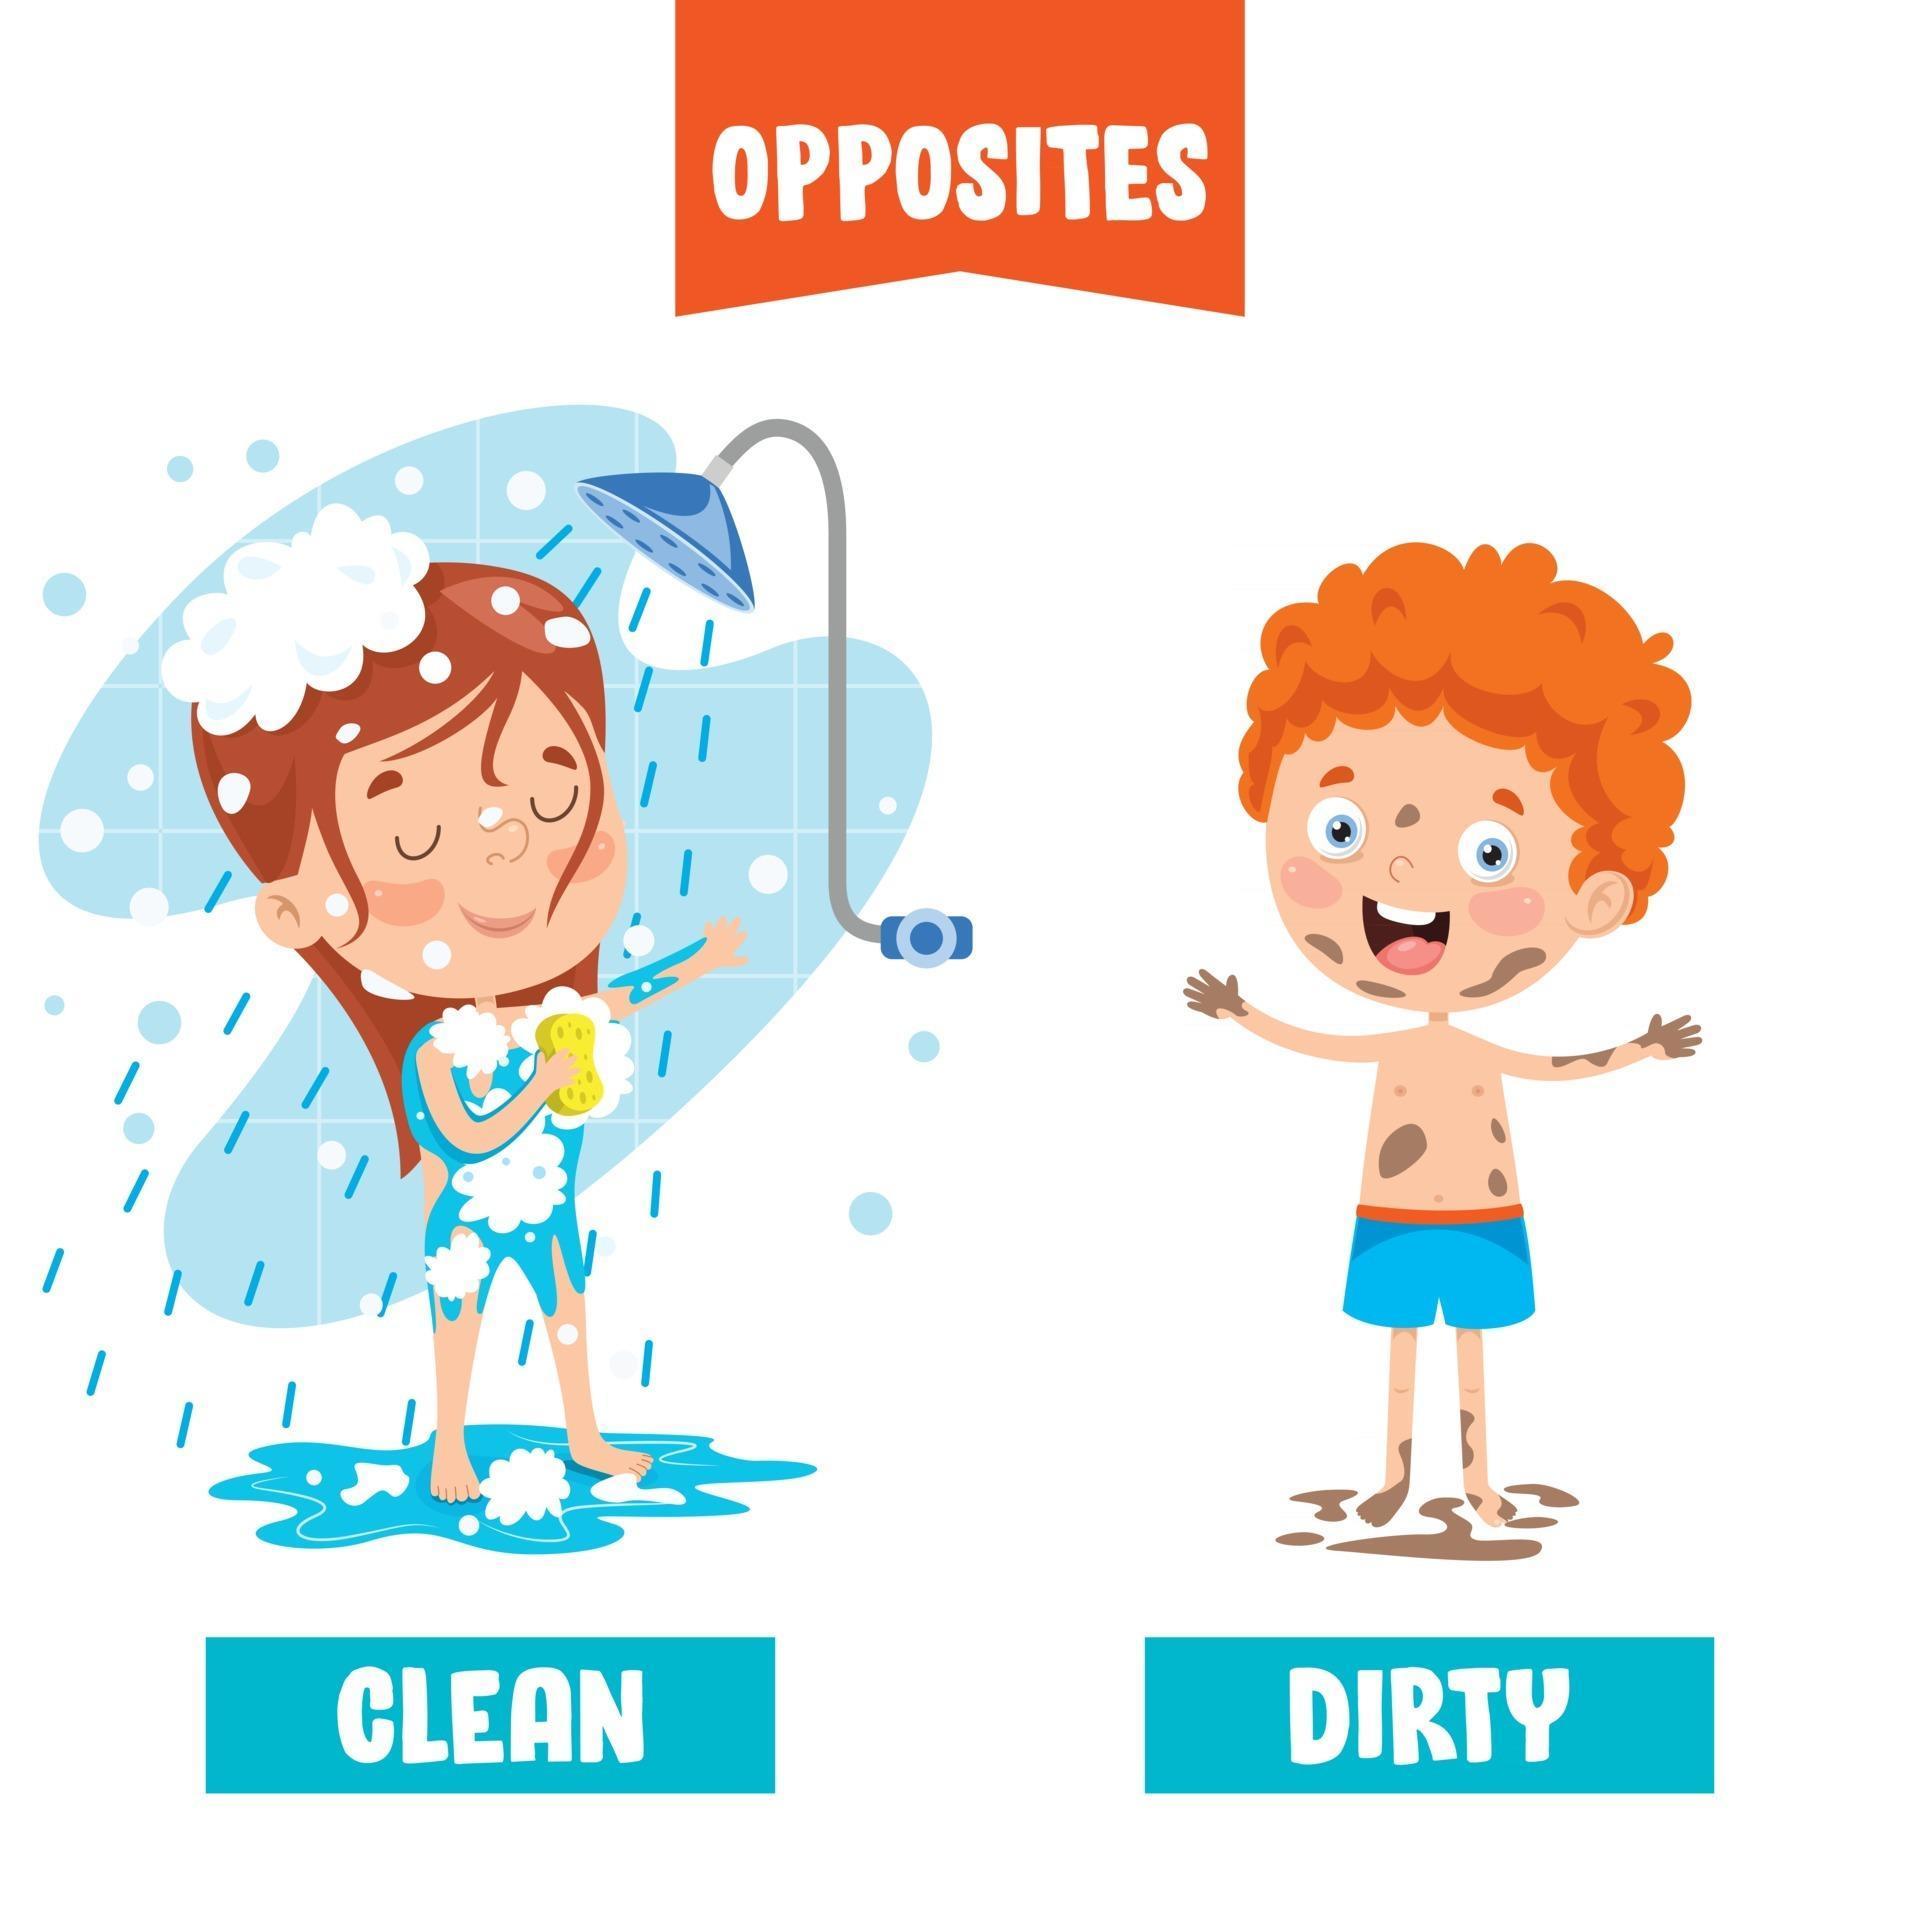 Dirty adjectives. Clean Dirty opposites. Opposites картинки для детей. Clean Dirty вектор. Clean Dirty английский в картинках.